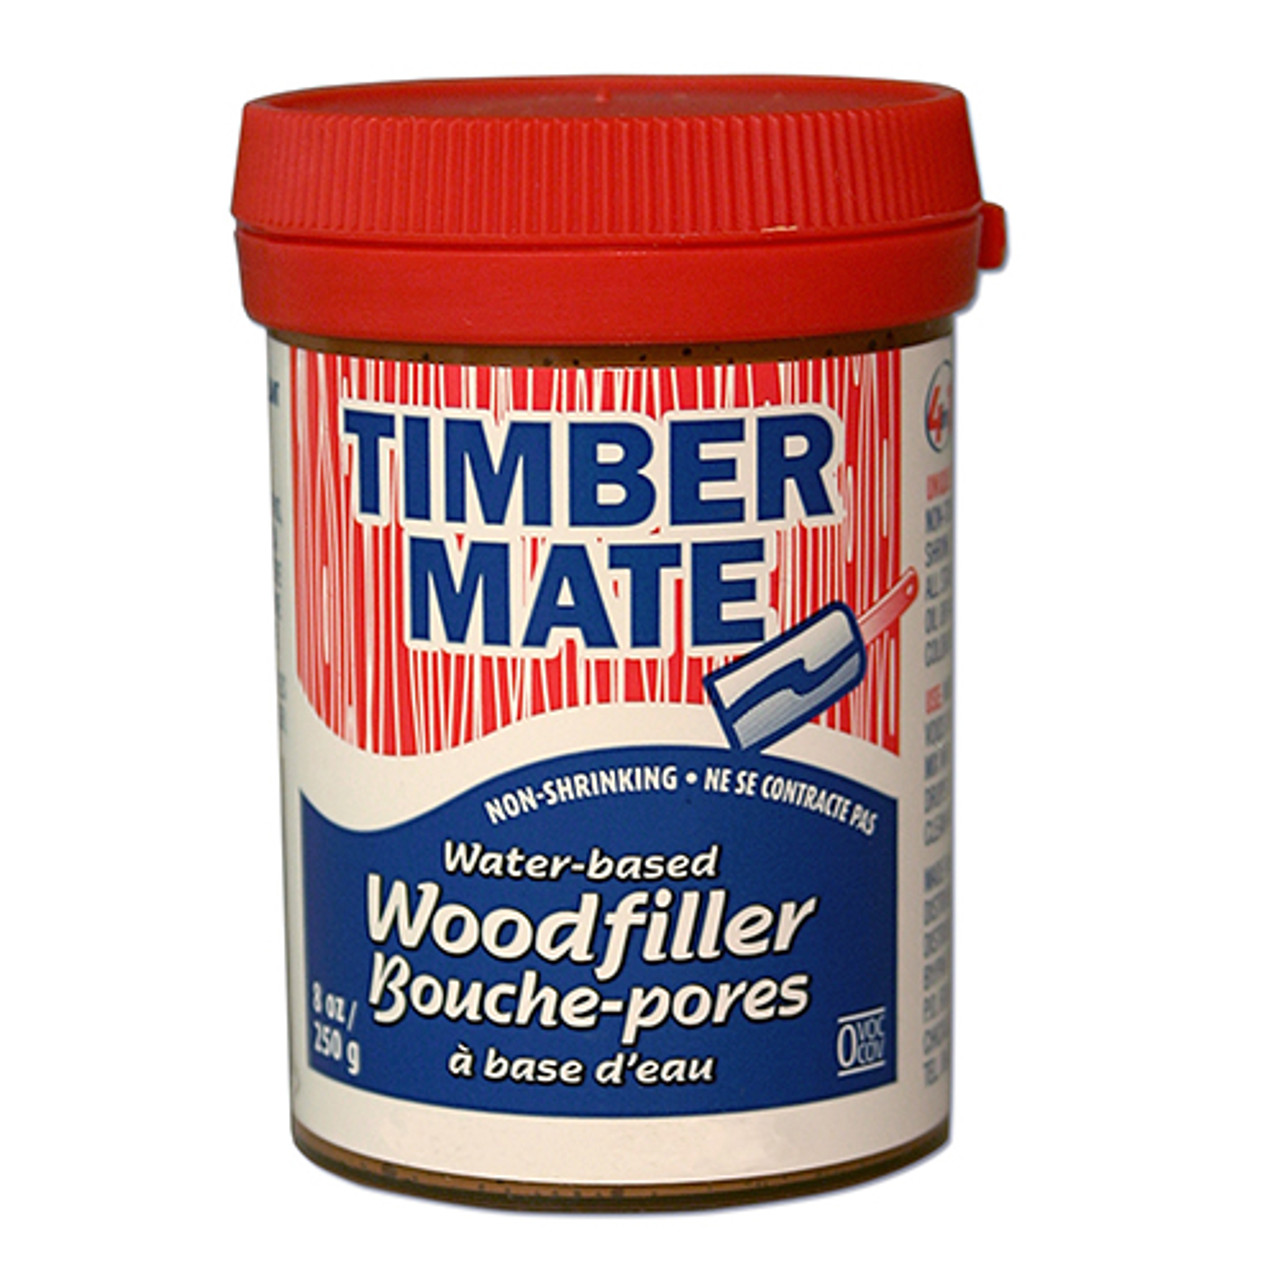 Timbermate Waterbased Wood Filler, Cherry, 8oz